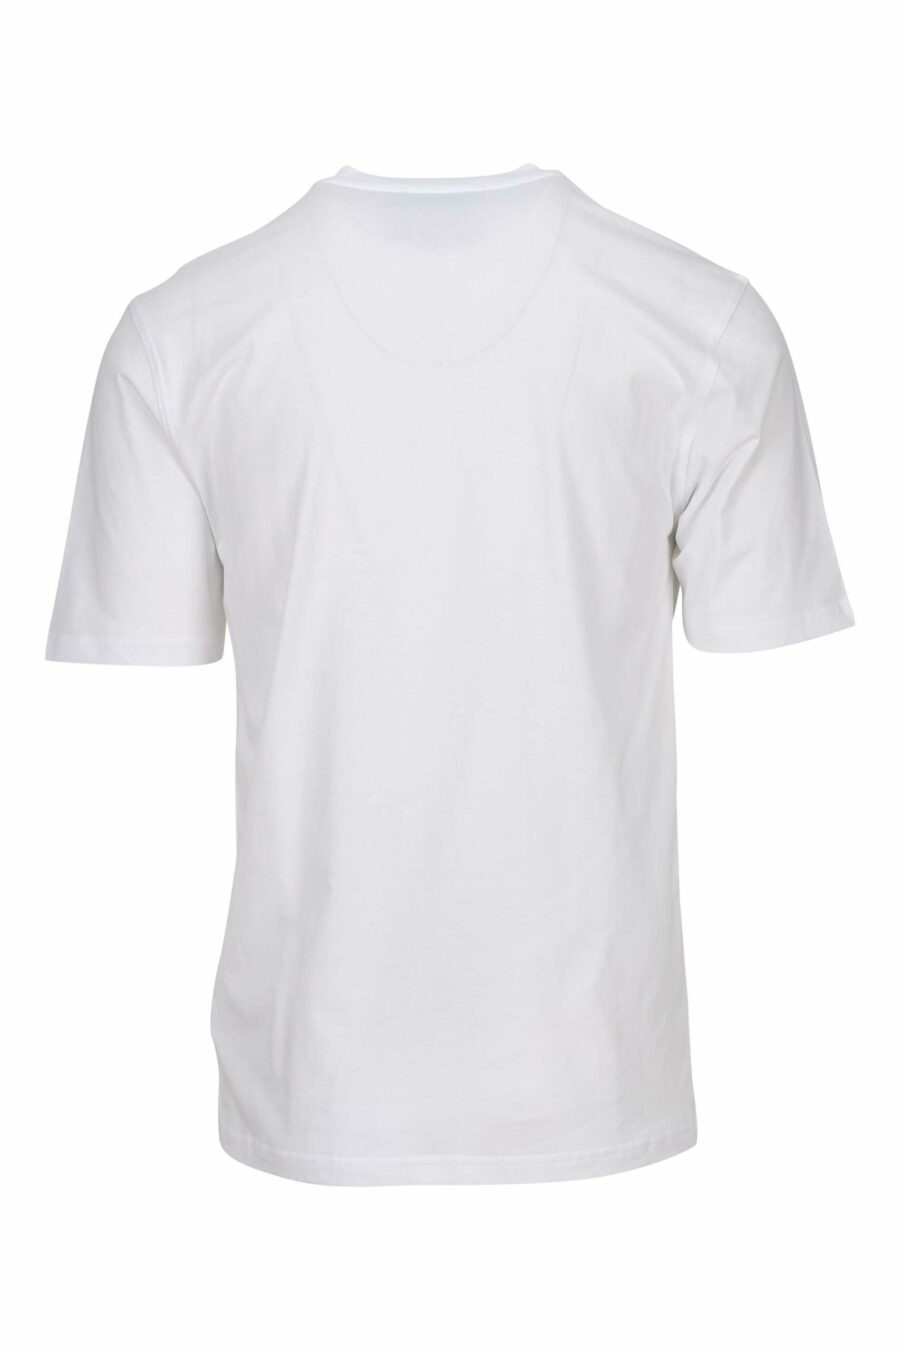 Camiseta blanca "oversize" con logo "in love we trust" - 667113764801 1 scaled